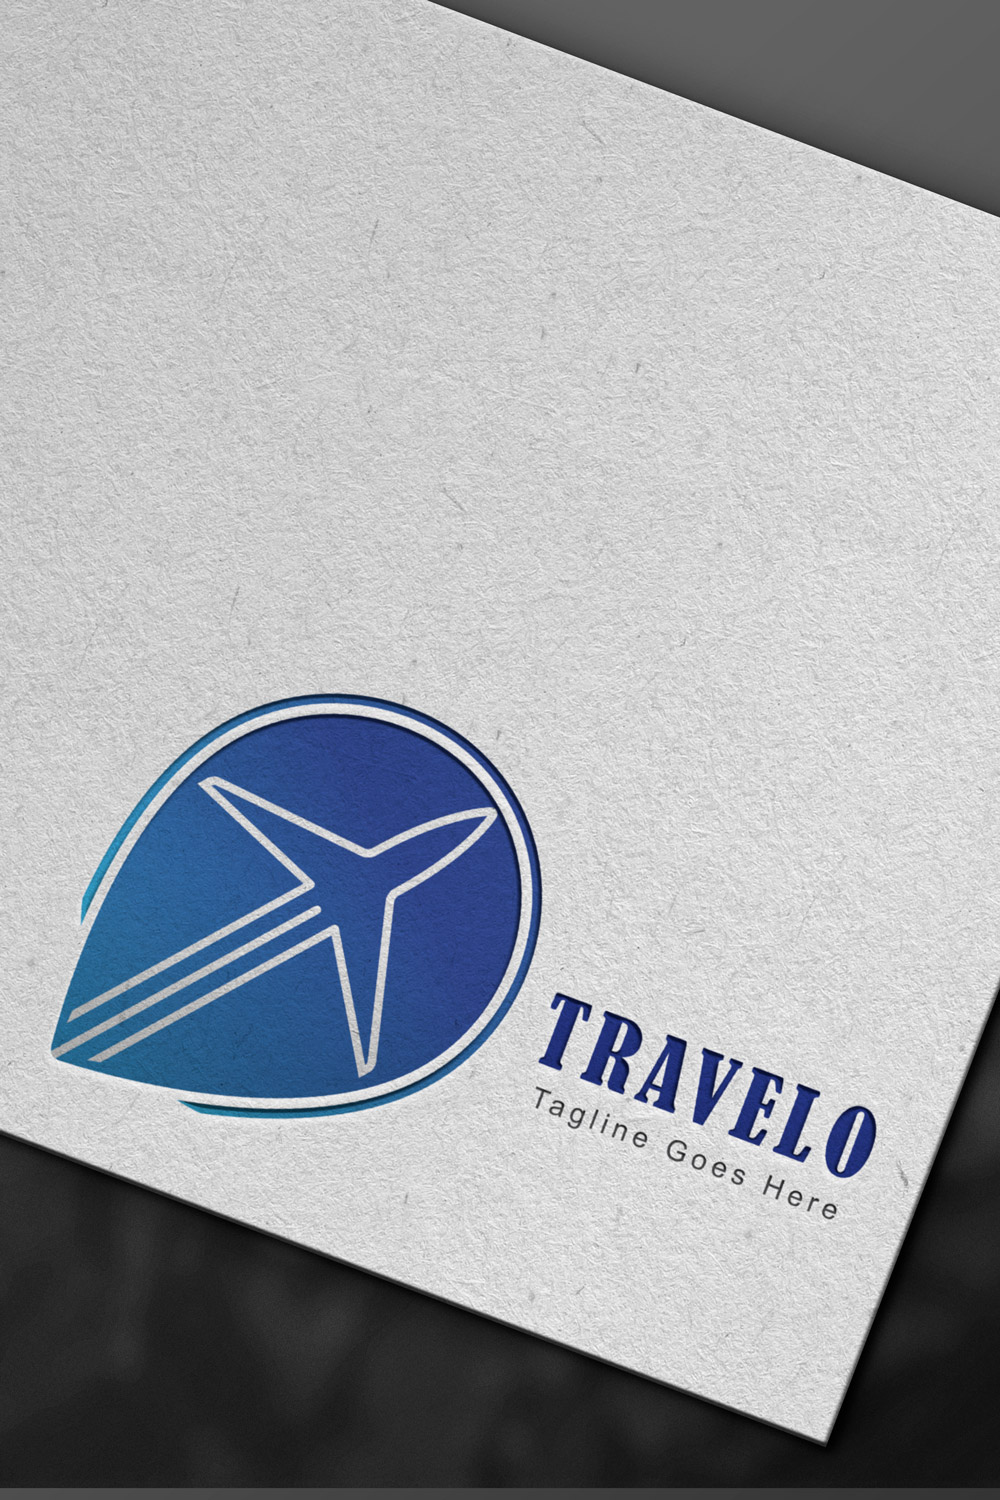 Travelling Logo Pinterest image.